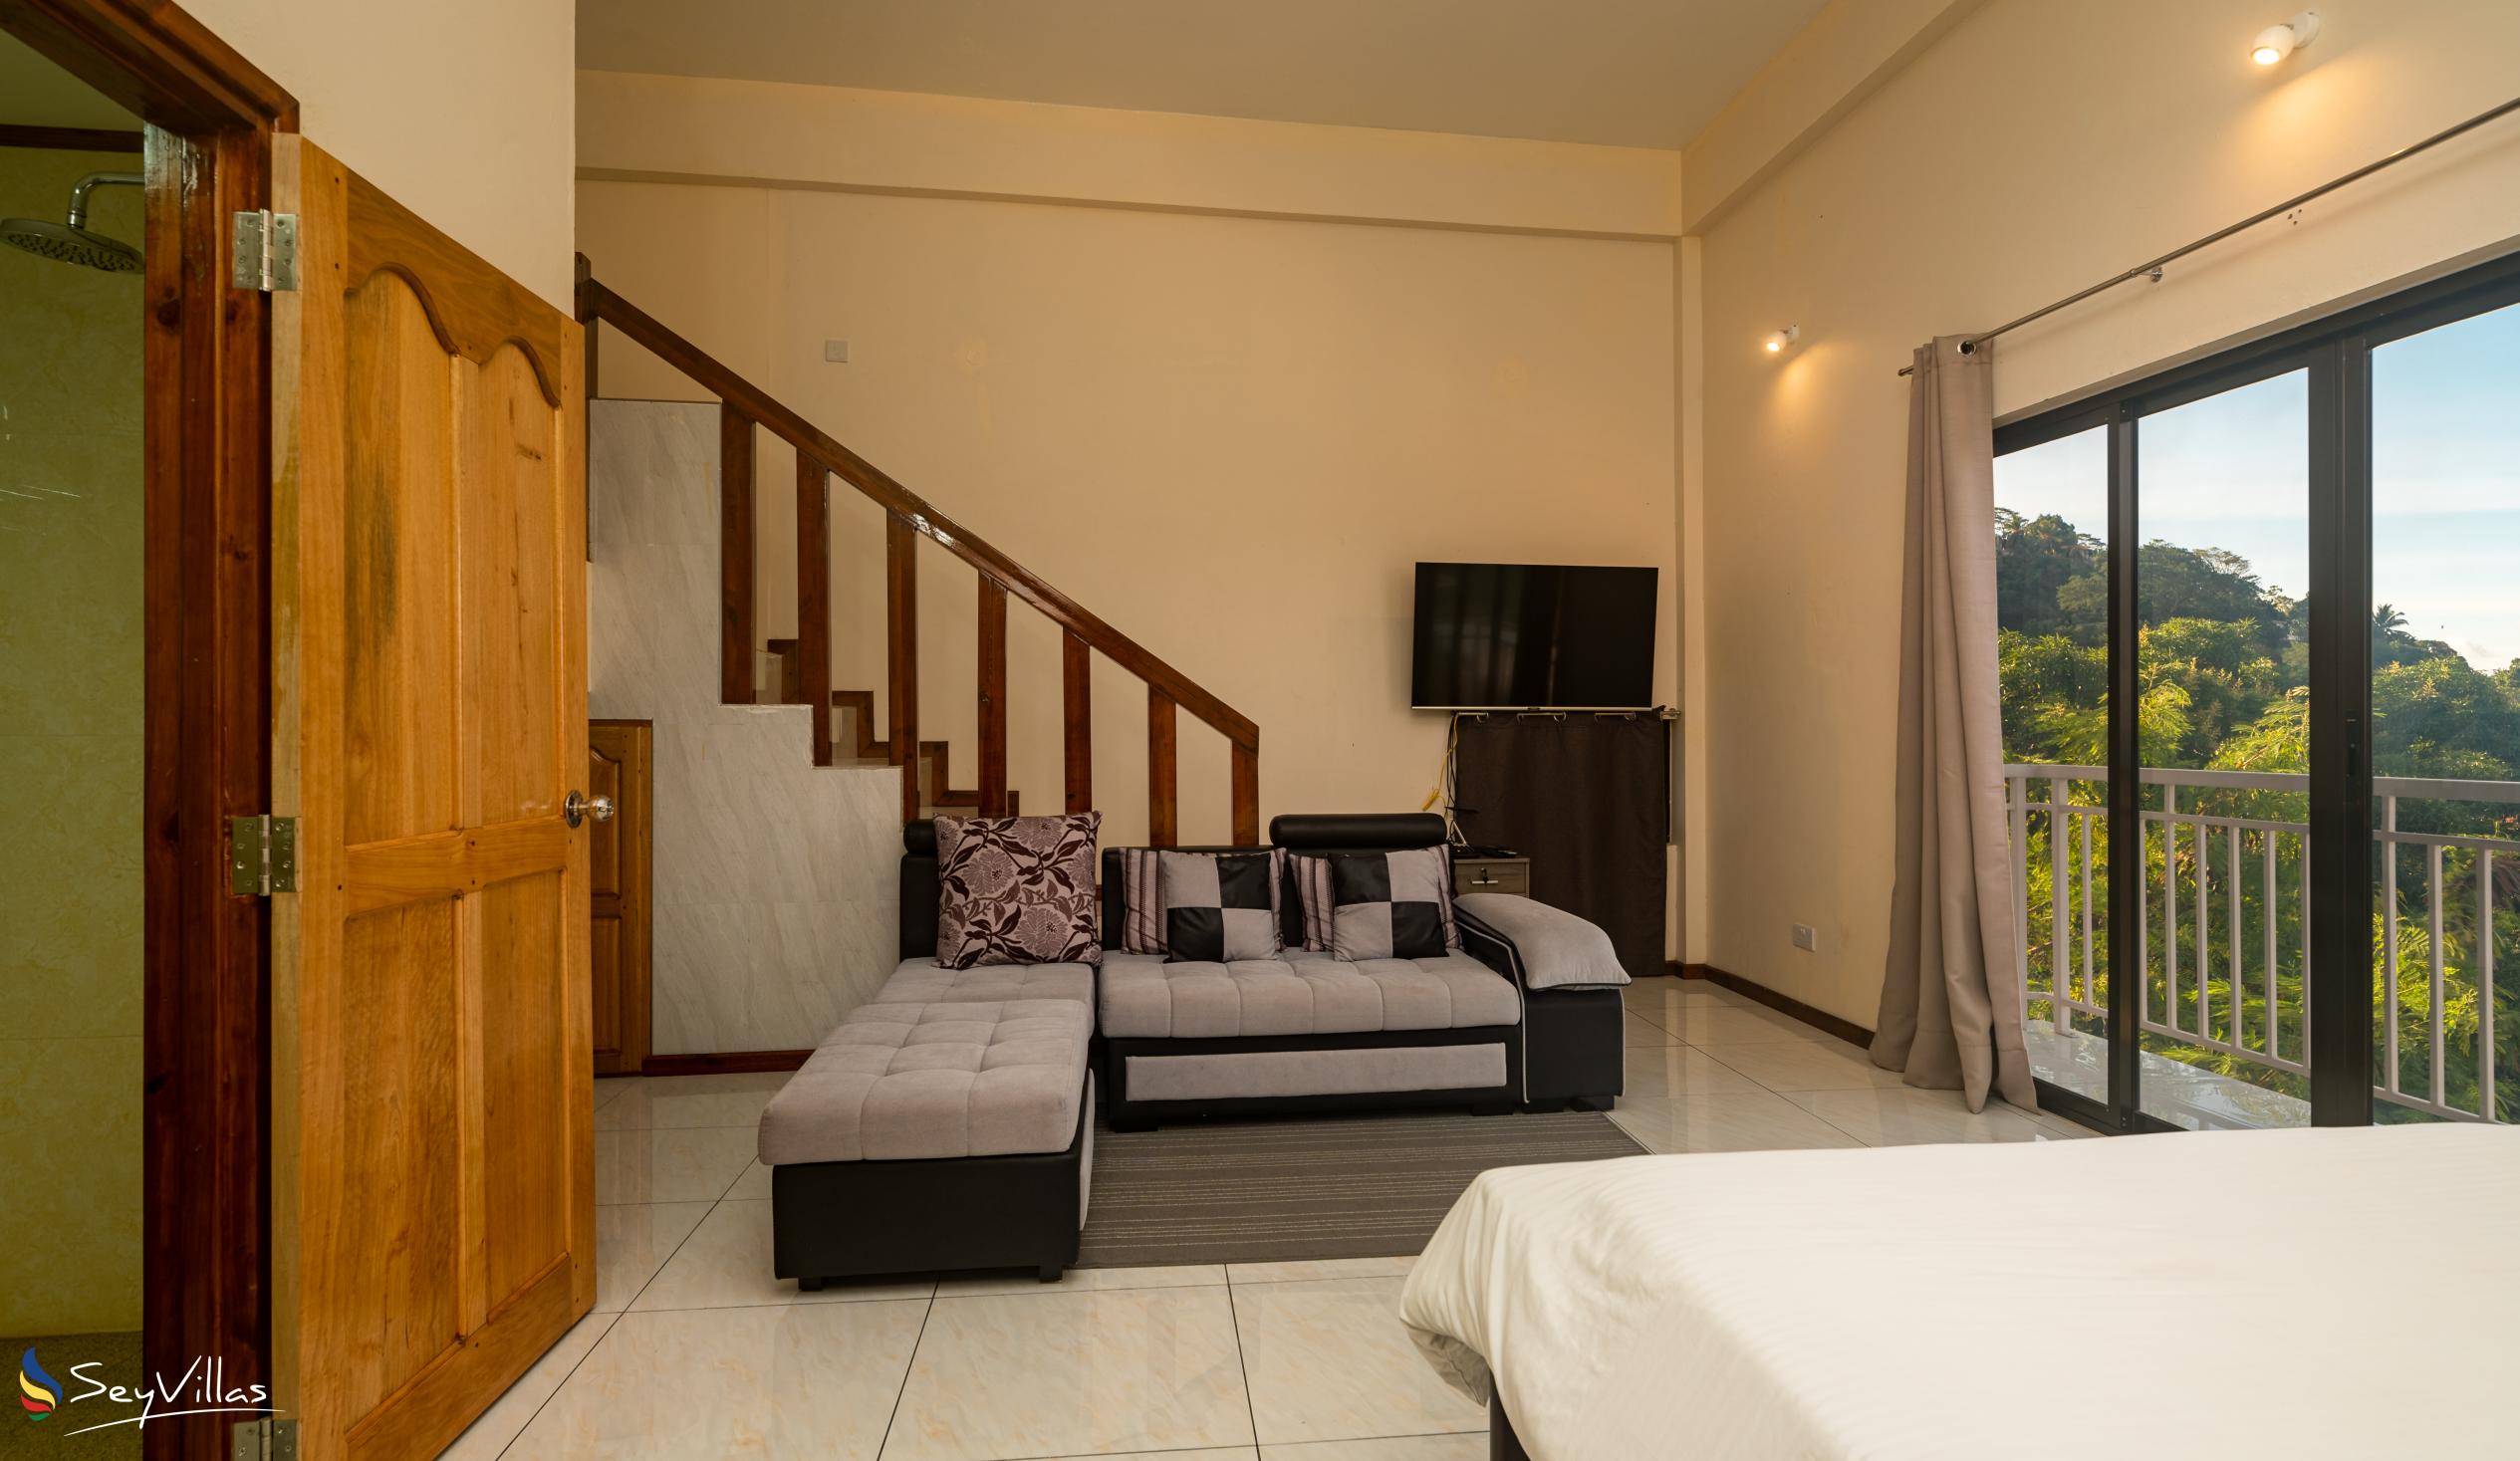 Photo 55: Maison L'Horizon - 1-Bedroom Apartment Lalin - Mahé (Seychelles)